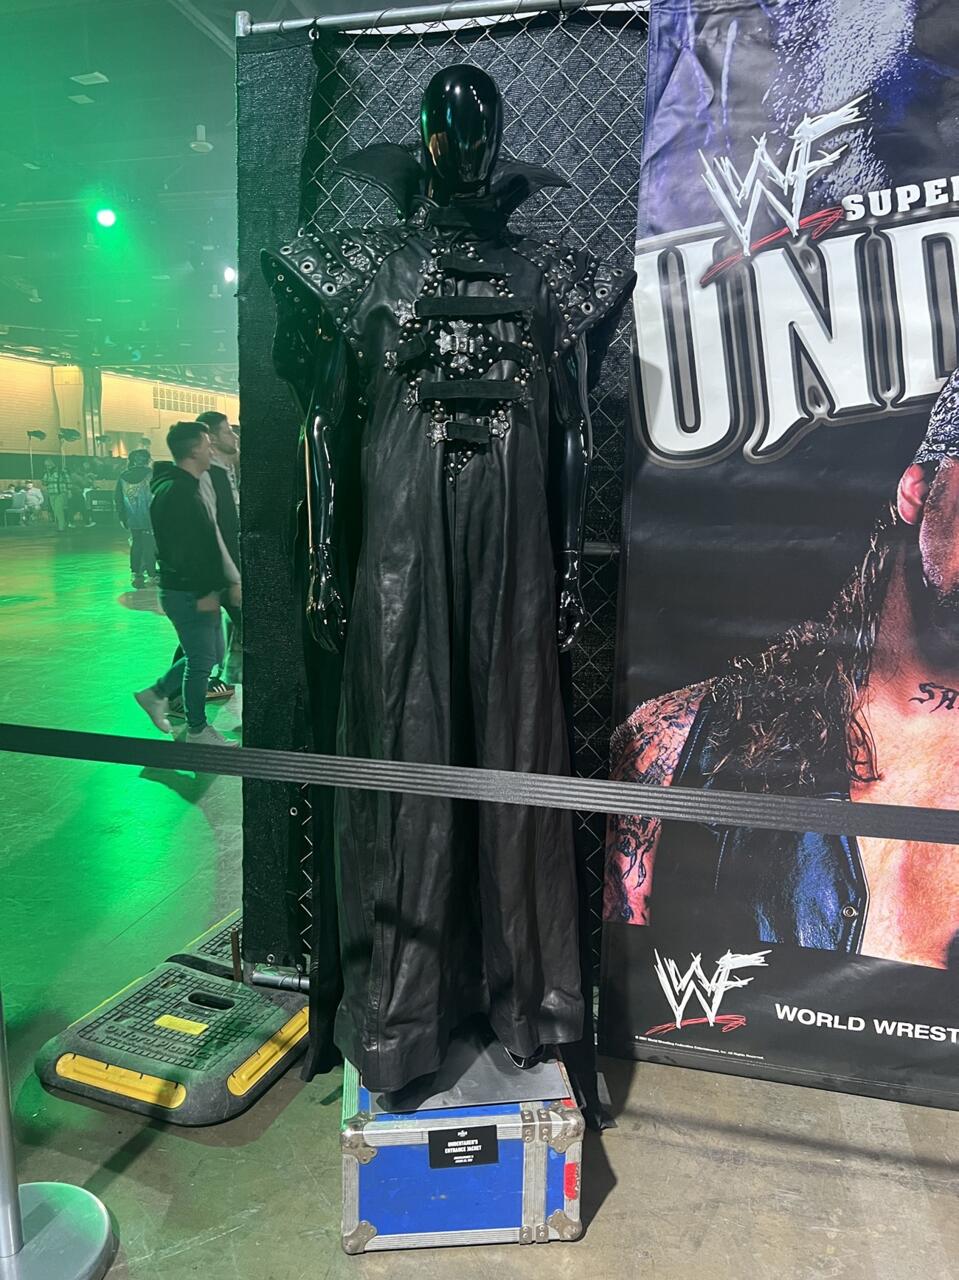 Undertaker's ring jacket